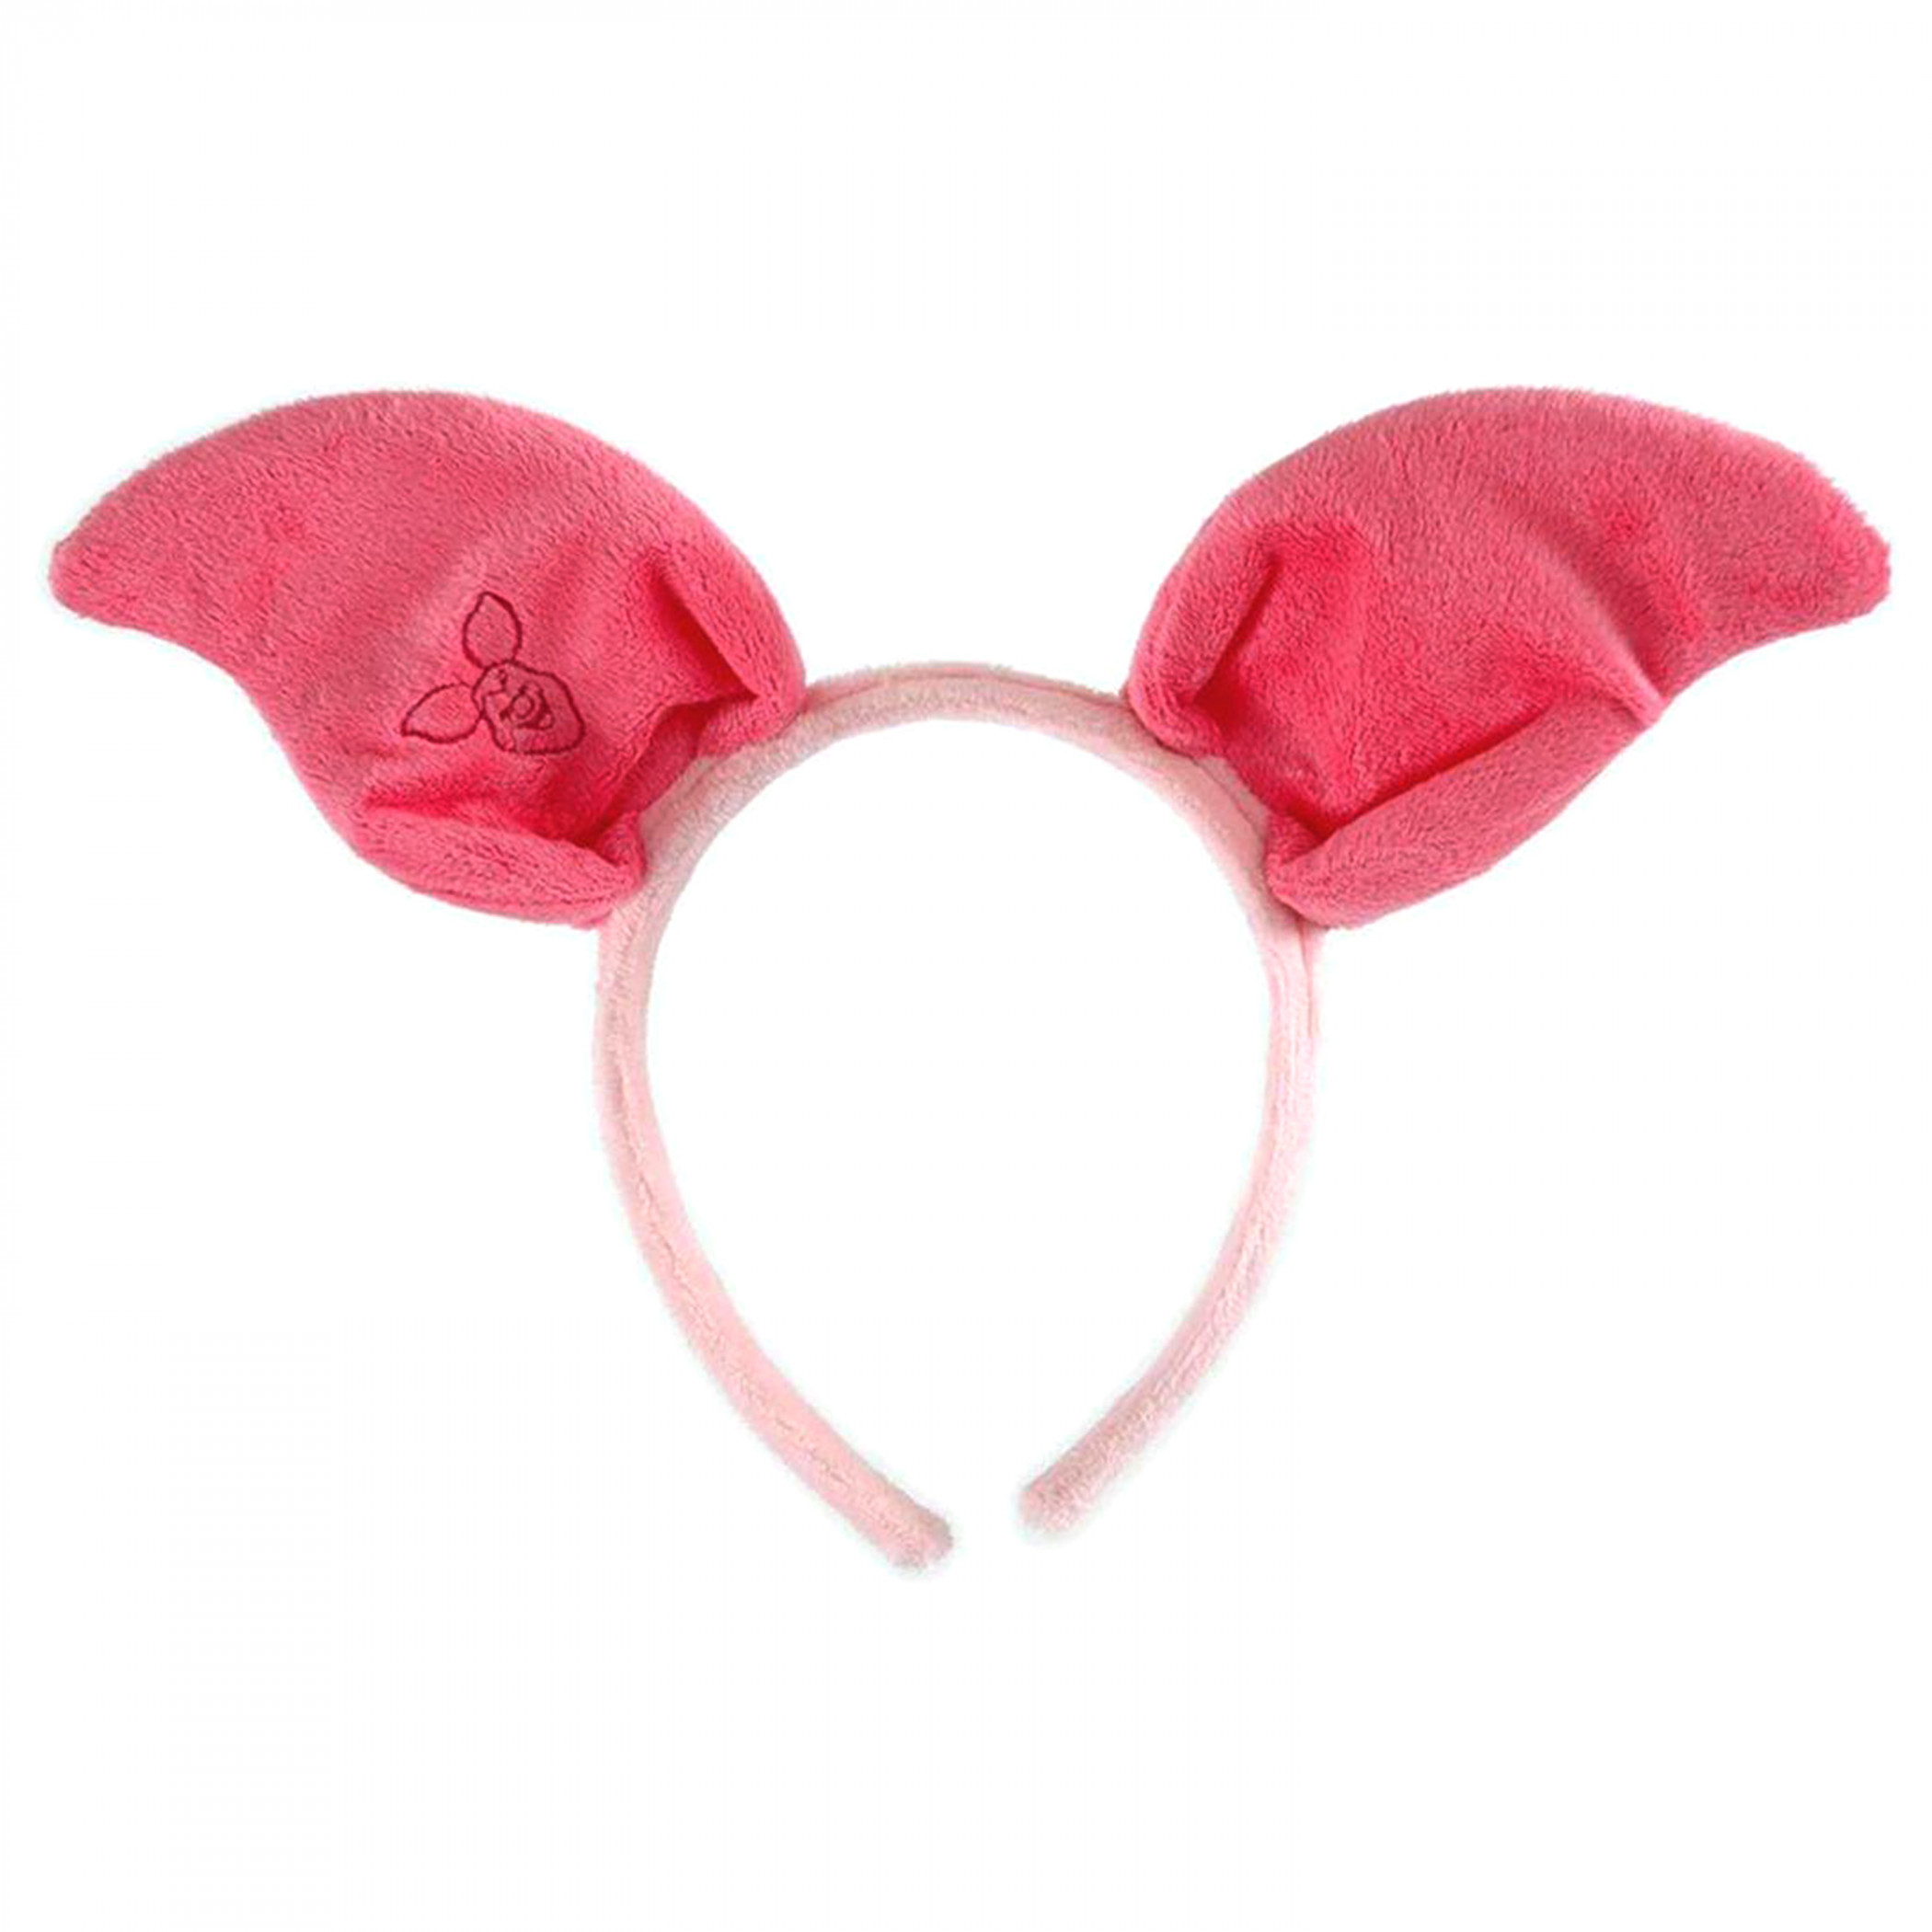 Winnie the Pooh Piglet Ears Headband